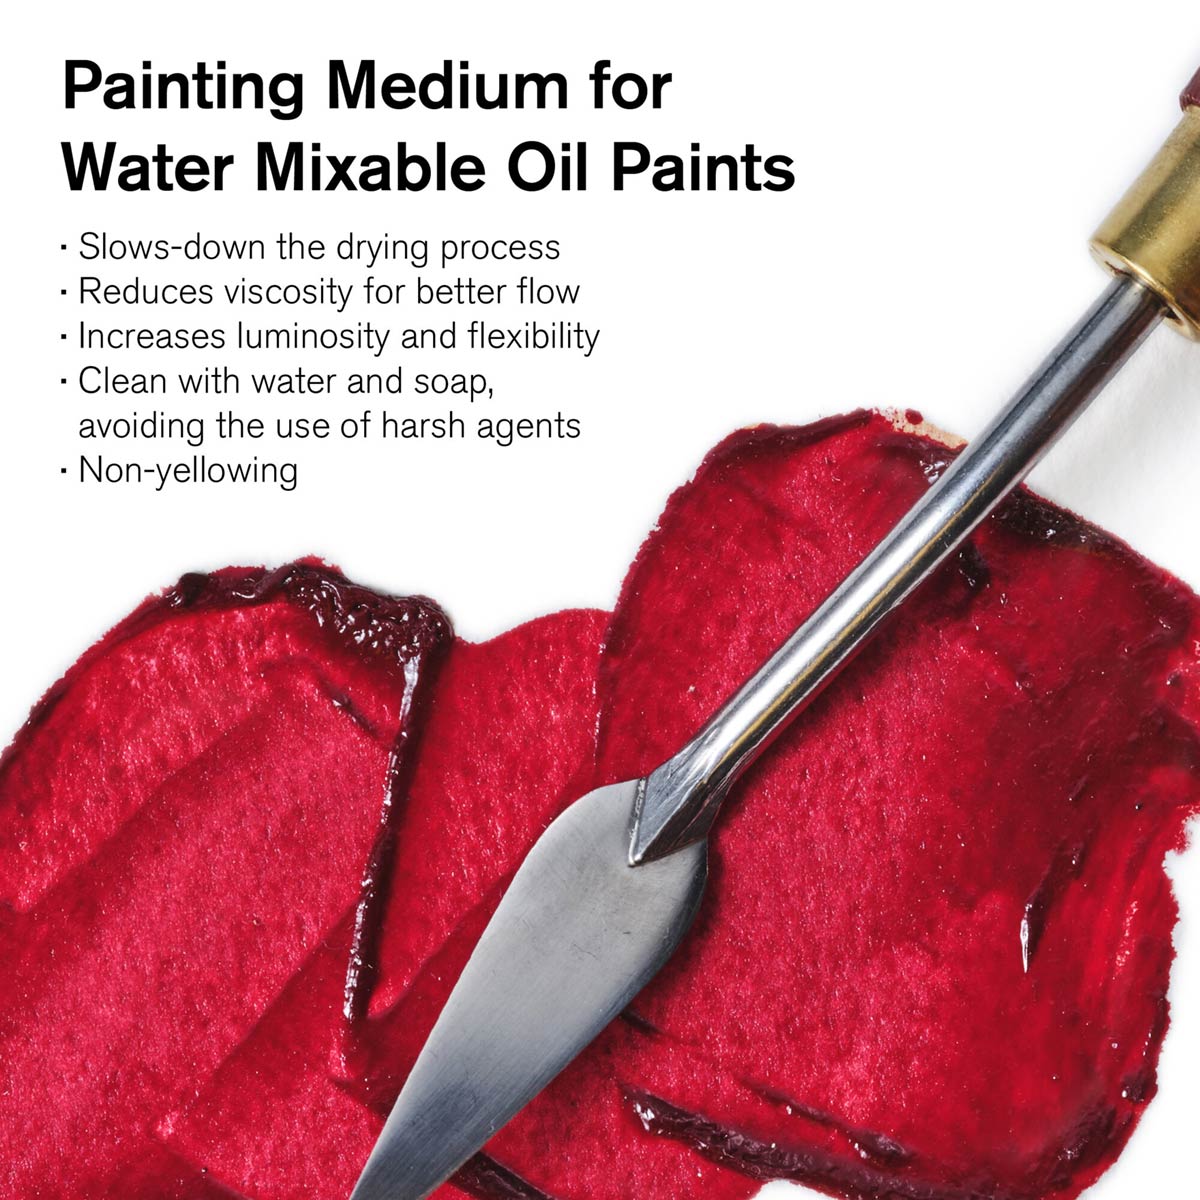 Winsor en Newton - Water Mixable Painting Medium - 250ml